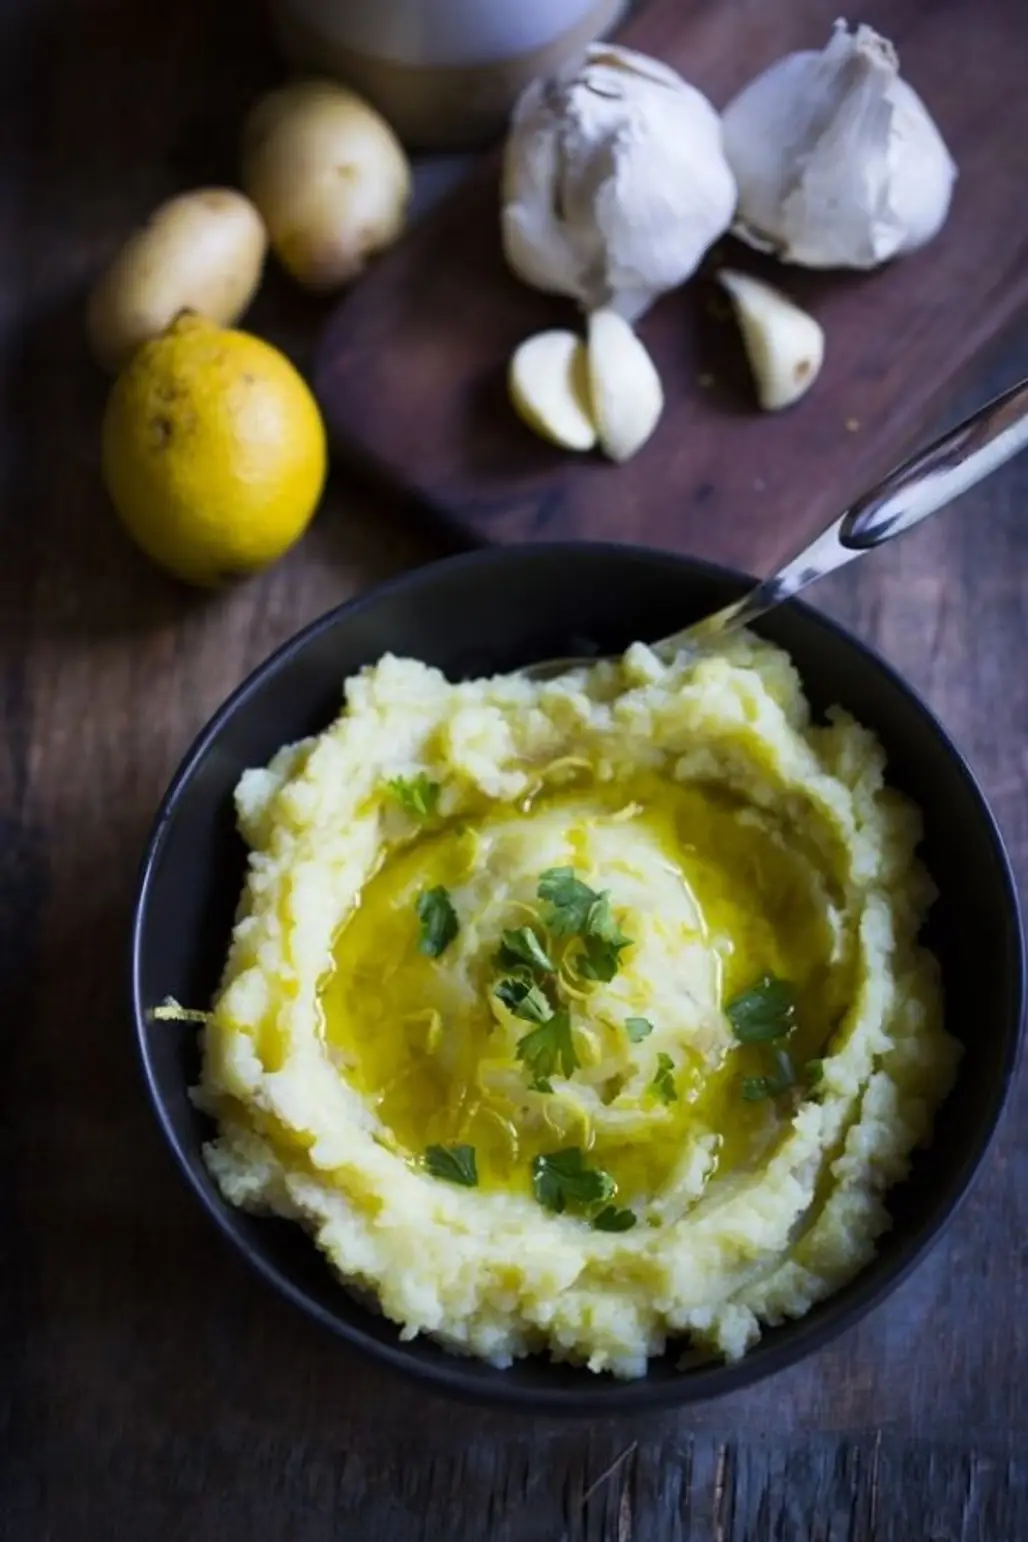 Skordalia –Dip/sauce Made with Potatoes, Garlic, Lemon and Olive Oil